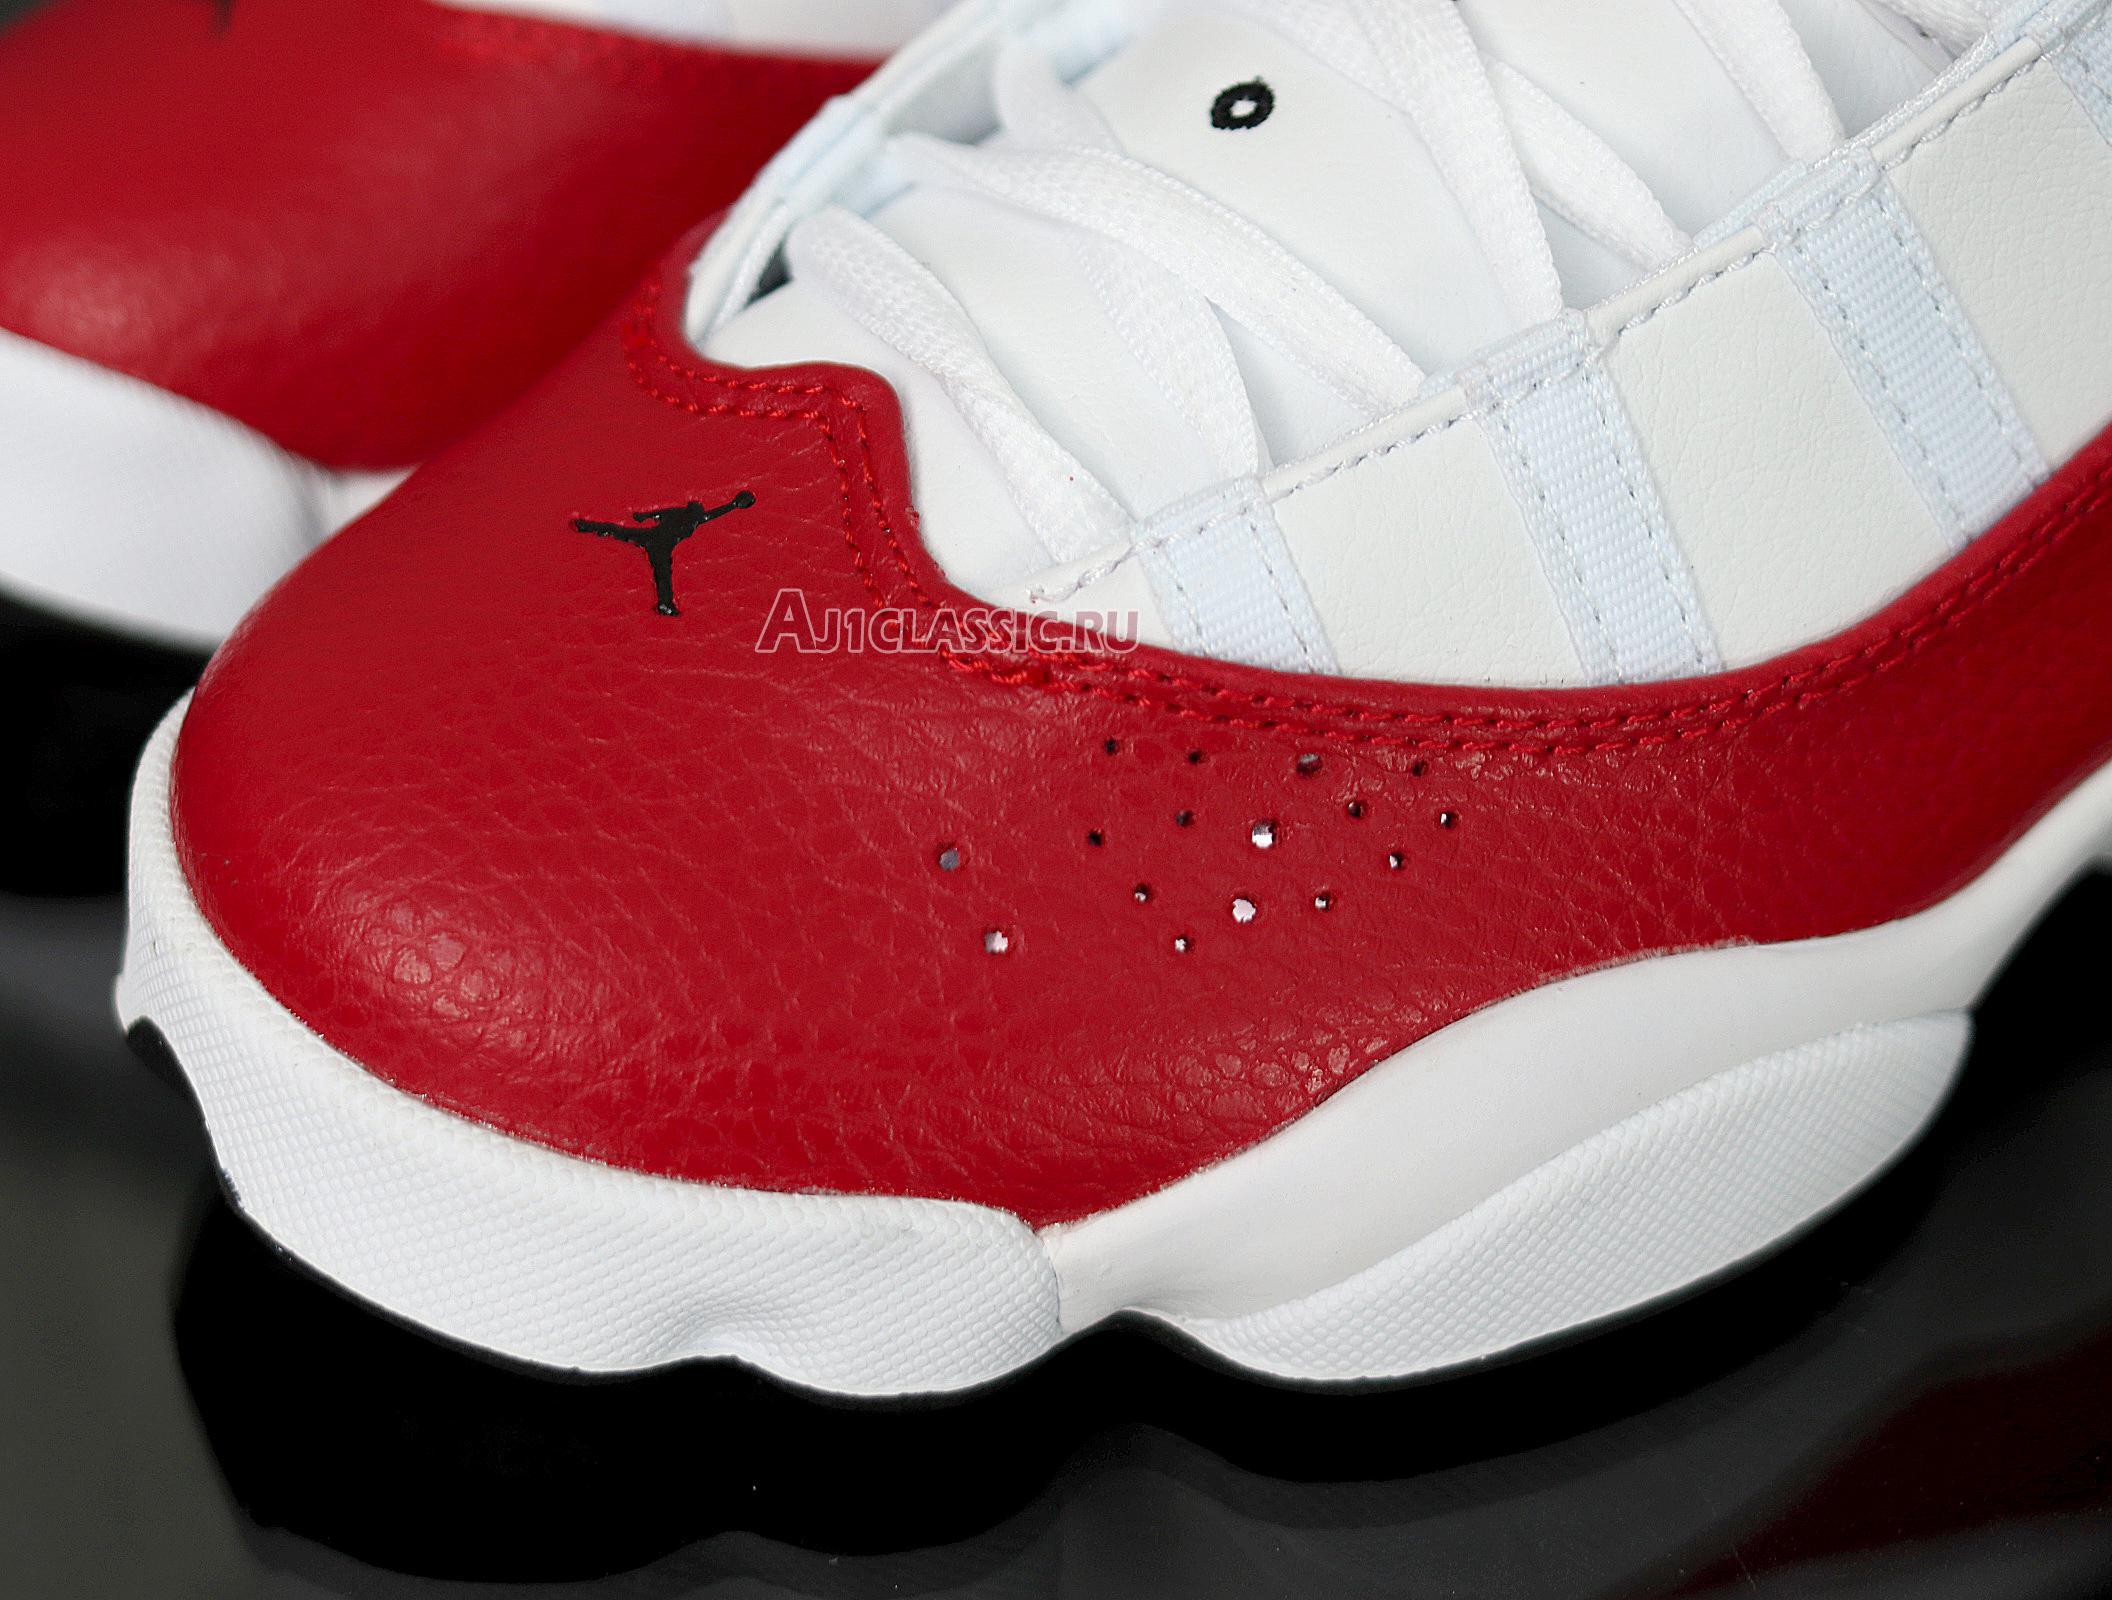 Air Jordan 6 Rings "White University Red" 322992-120